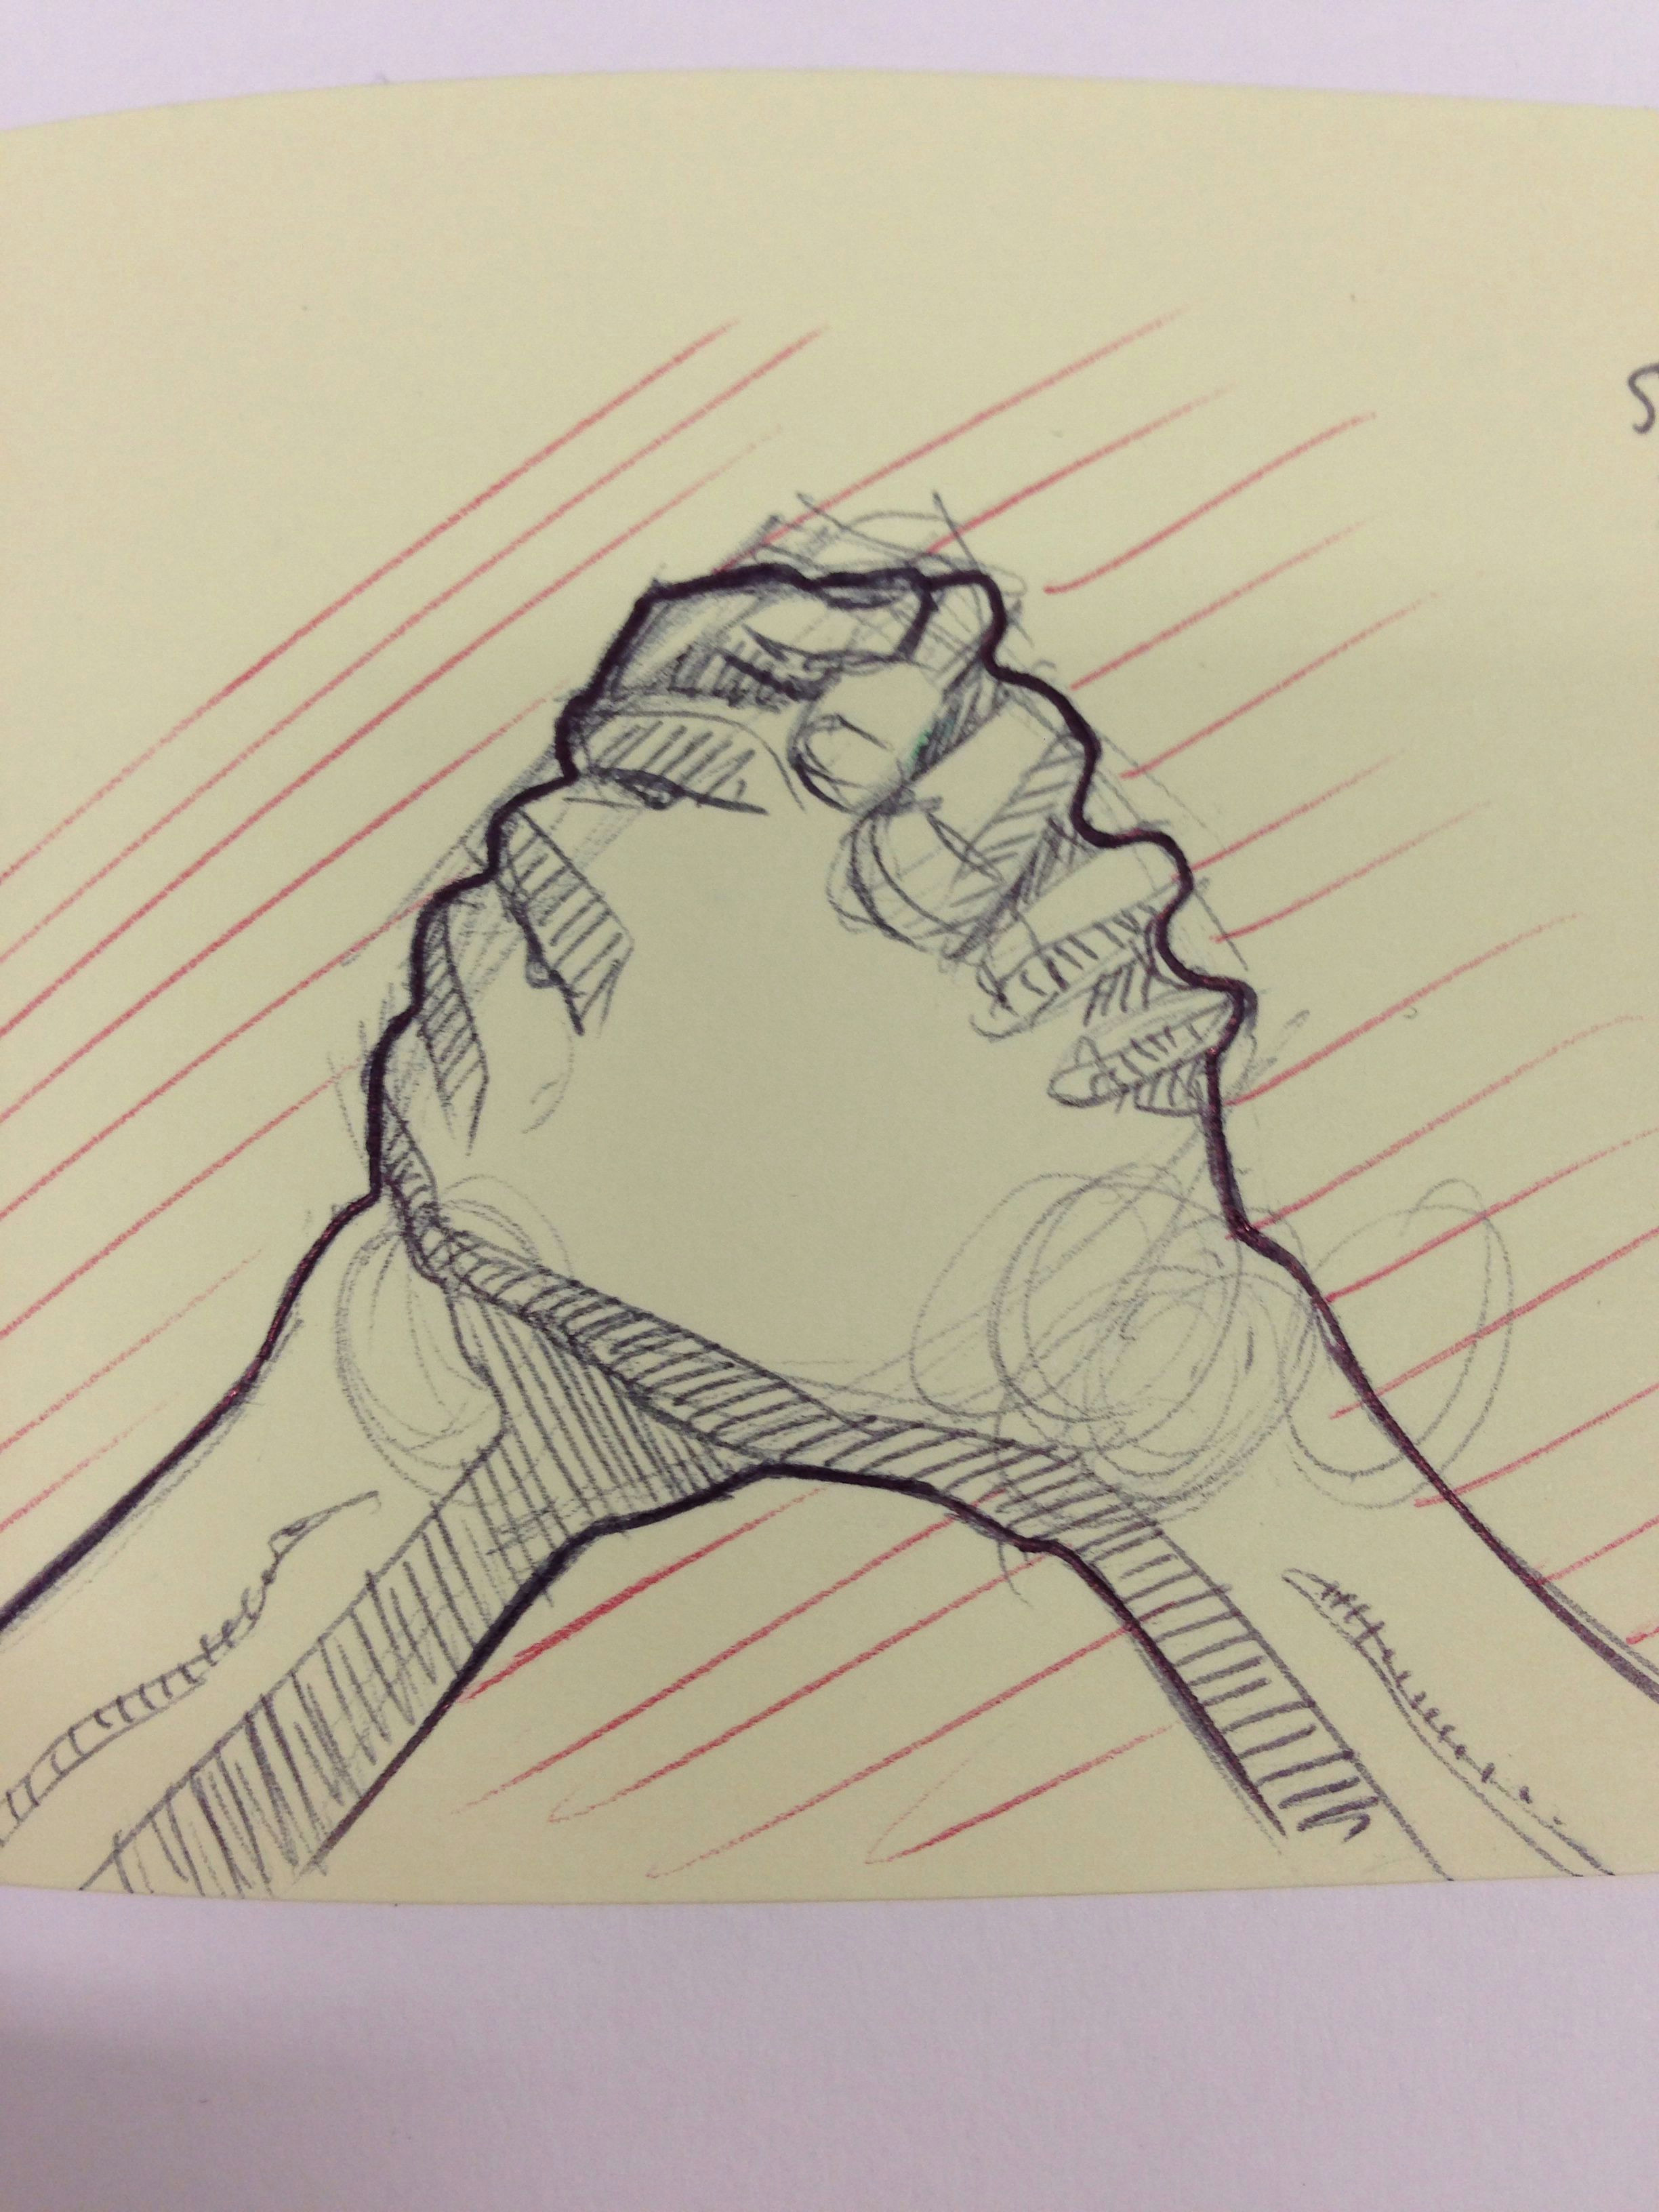 Drawings Of A Handshake Anatomy Of A Handshake Ballpoint Sketch Jack Darby Love In